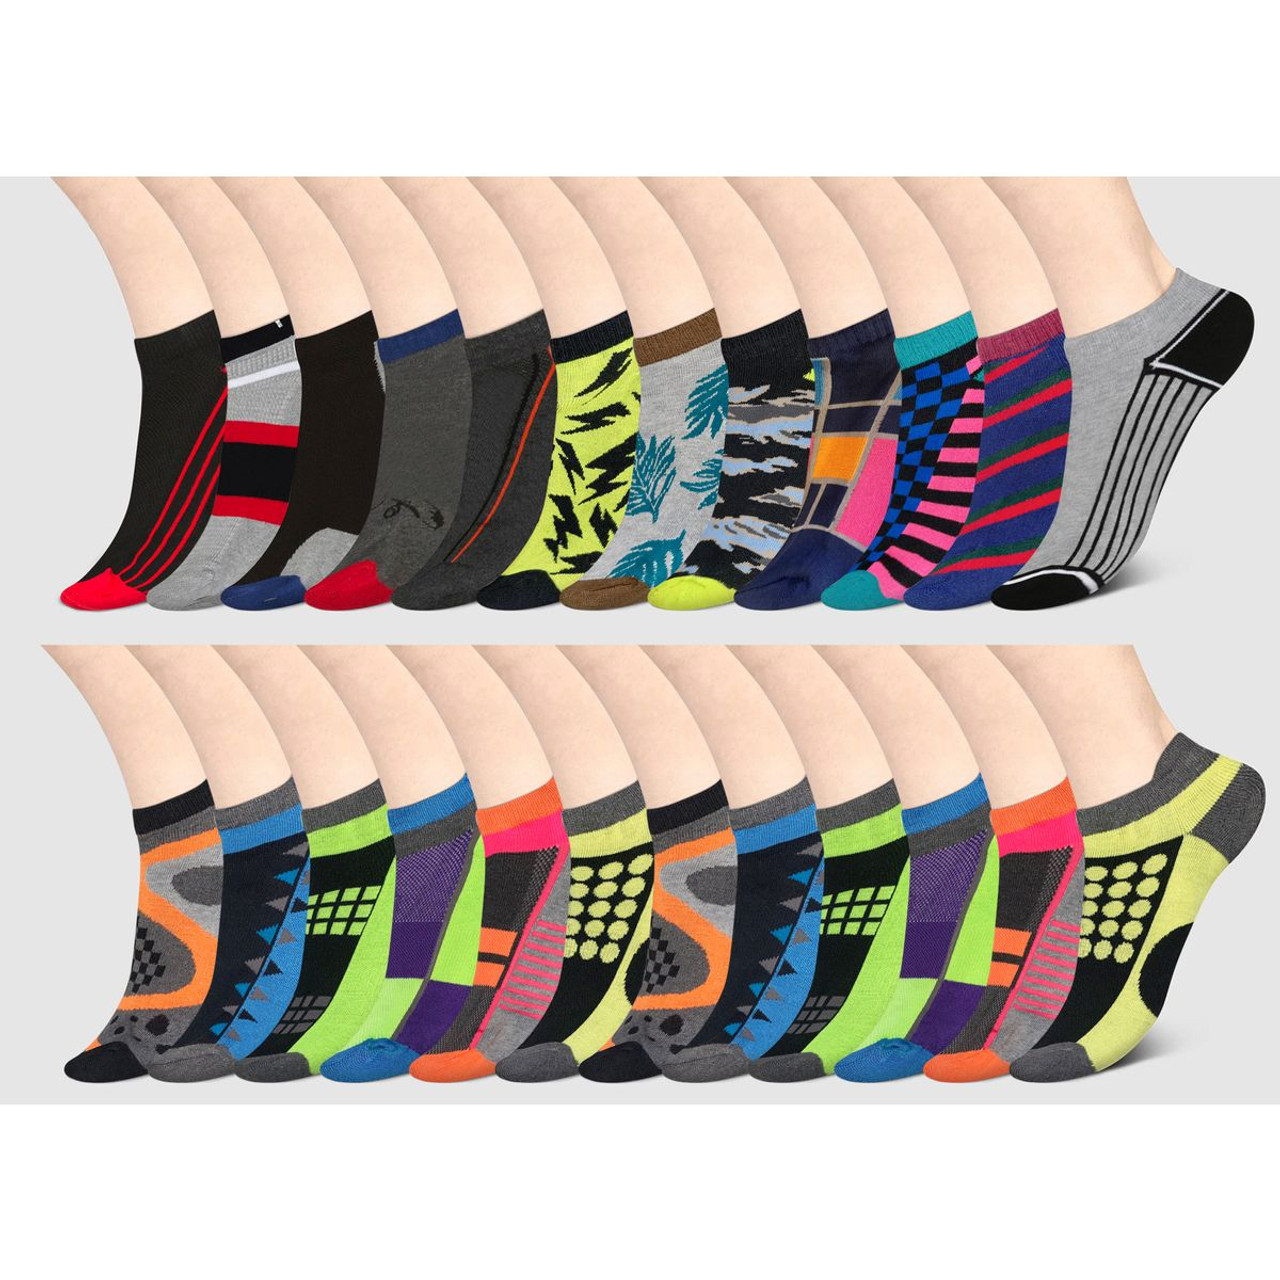 James Fiallo® Men's Moisture-Wicking Performance Low-Cut Socks (24-Pair) product image